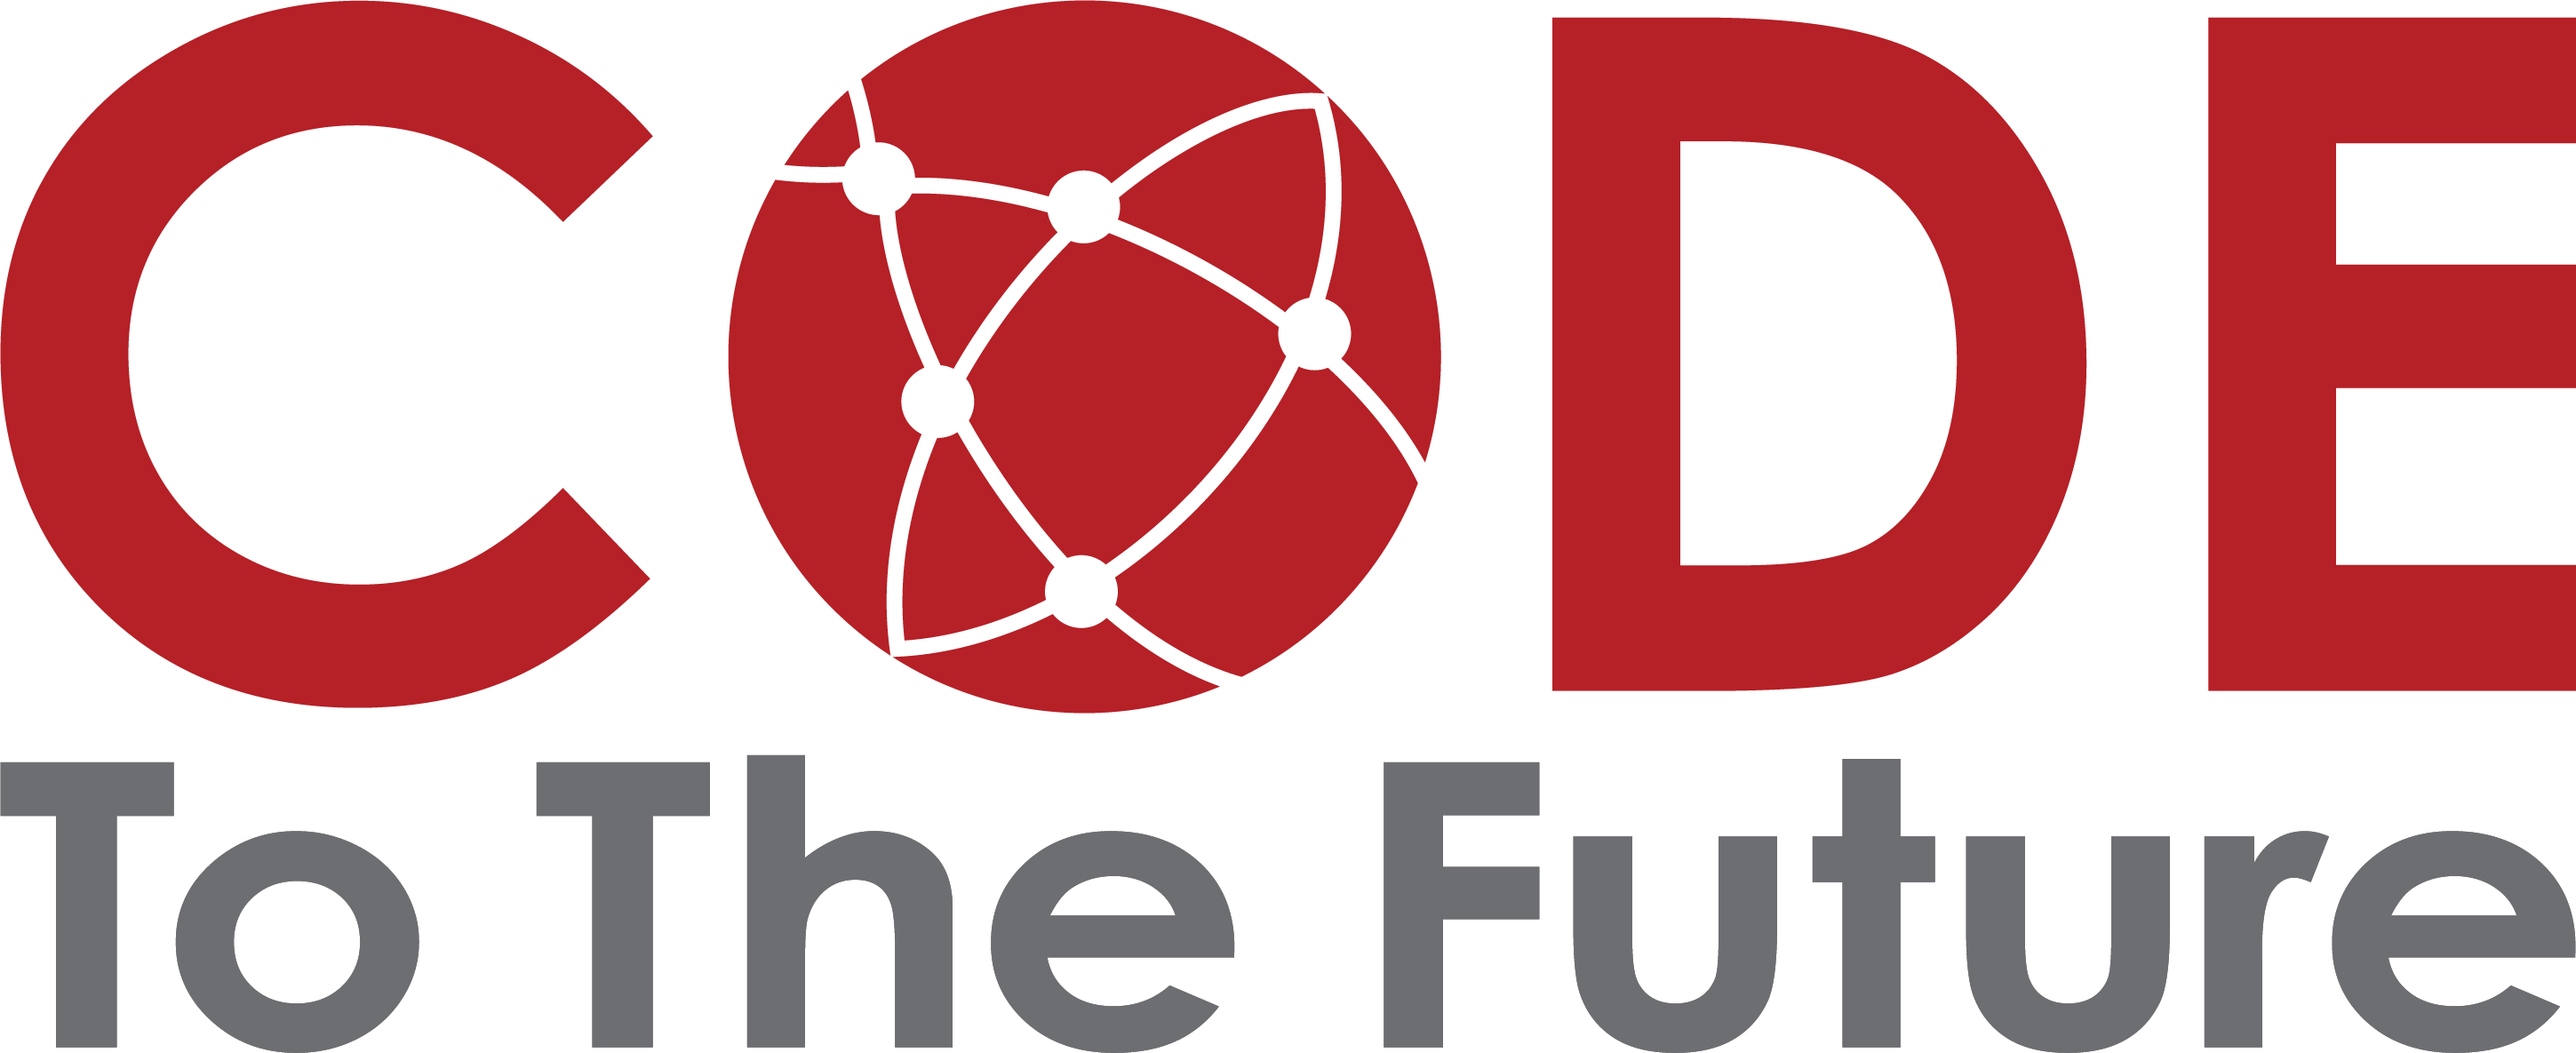 Code to the Future logo